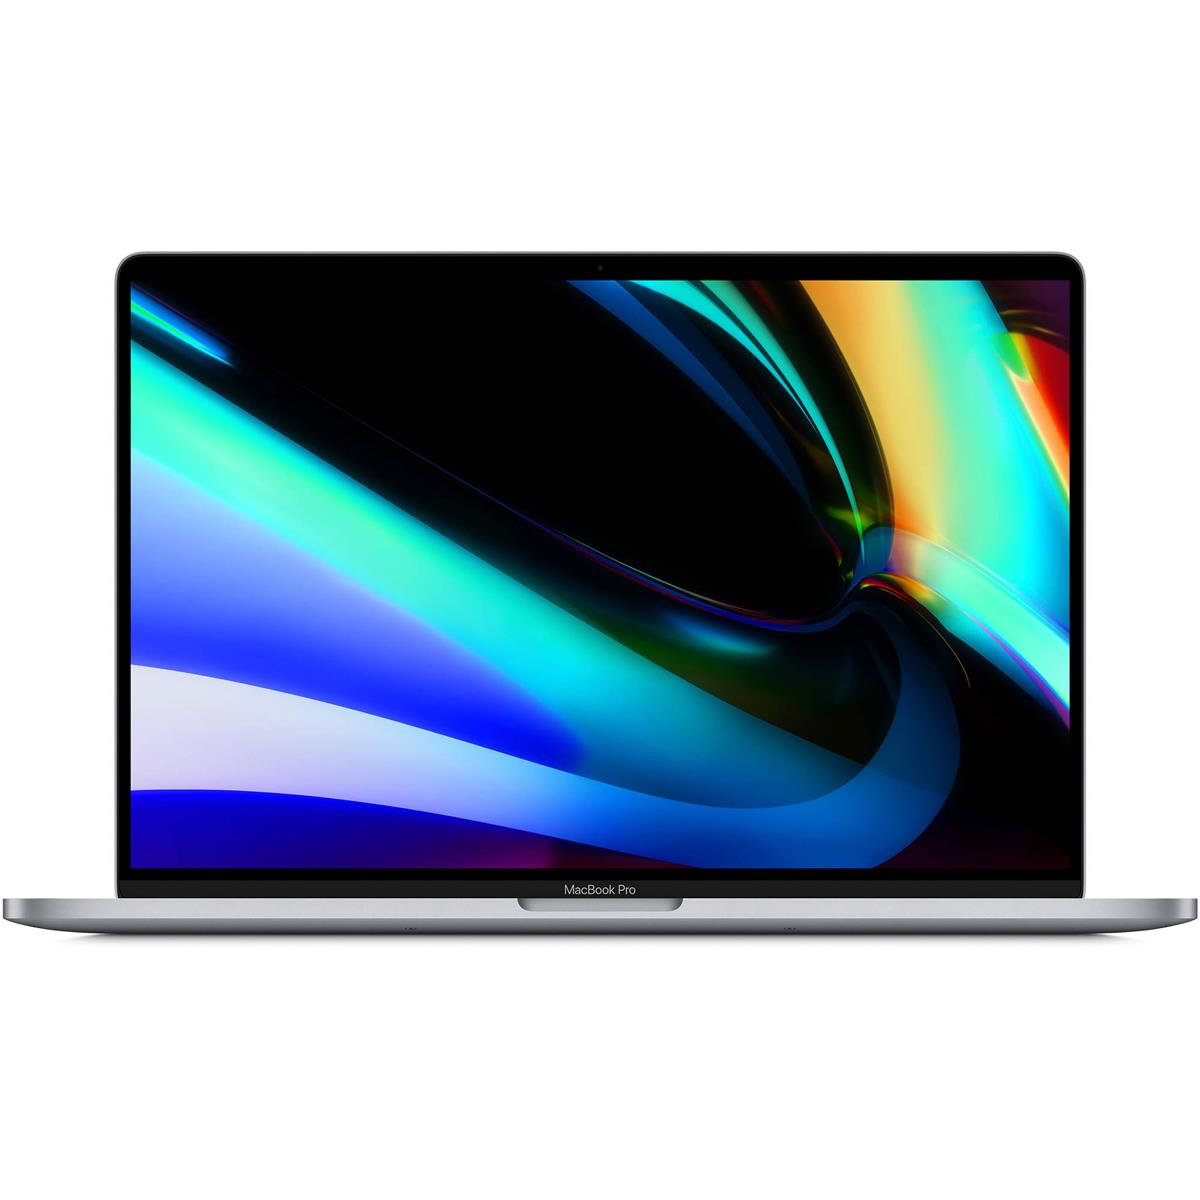 Apple MacBook Pro 16″ with Touch Bar, 9th-Gen 6-Core Intel Core i7 2.6GHz, 16GB RAM, 512GB SSD, AMD Radeon Pro 5300M 4GB, Space Gray, Late 2019